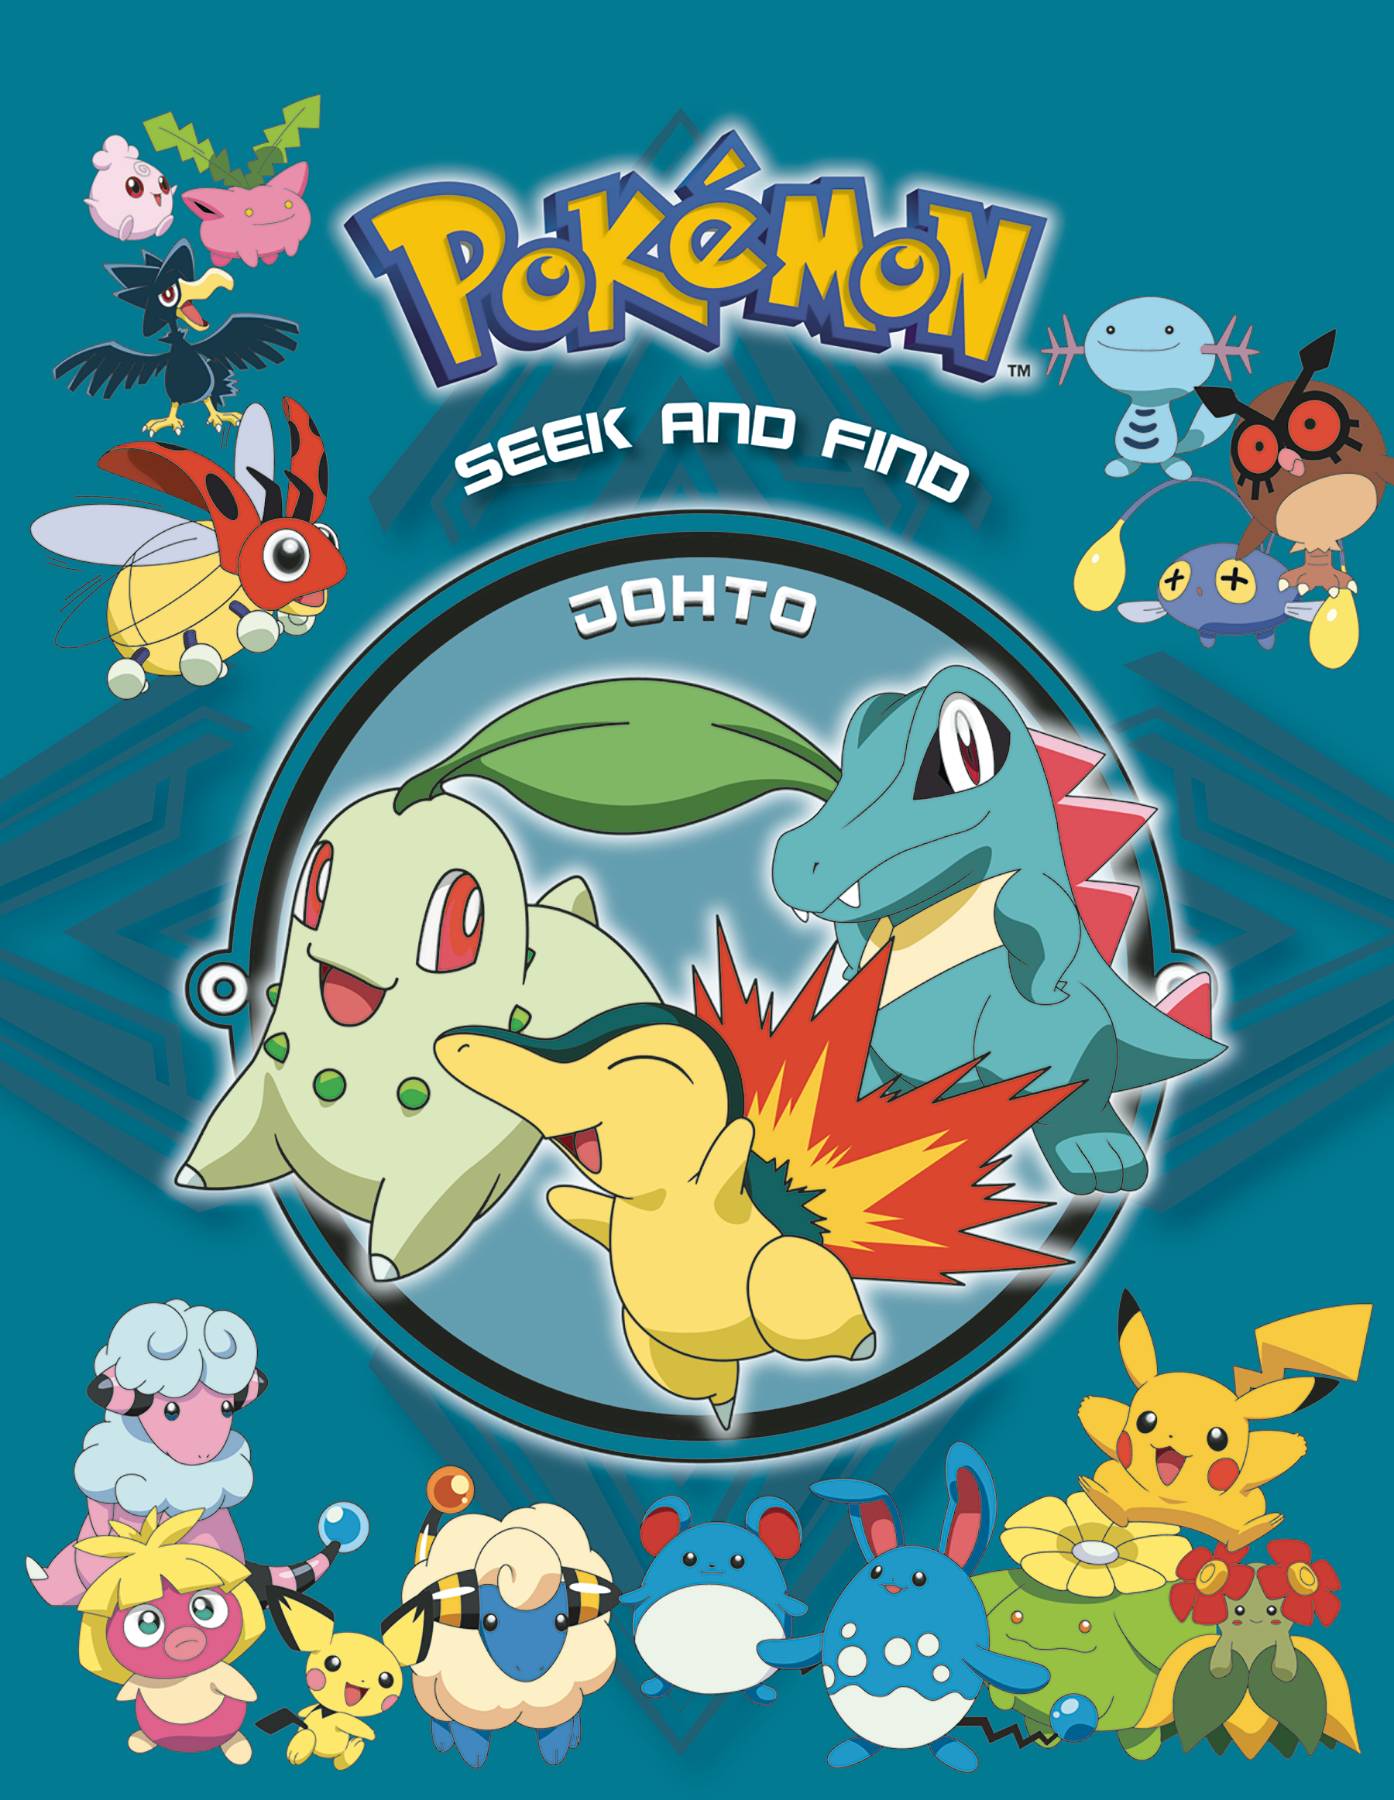 Pokémon Seek & Find Hardcover #0 Johto